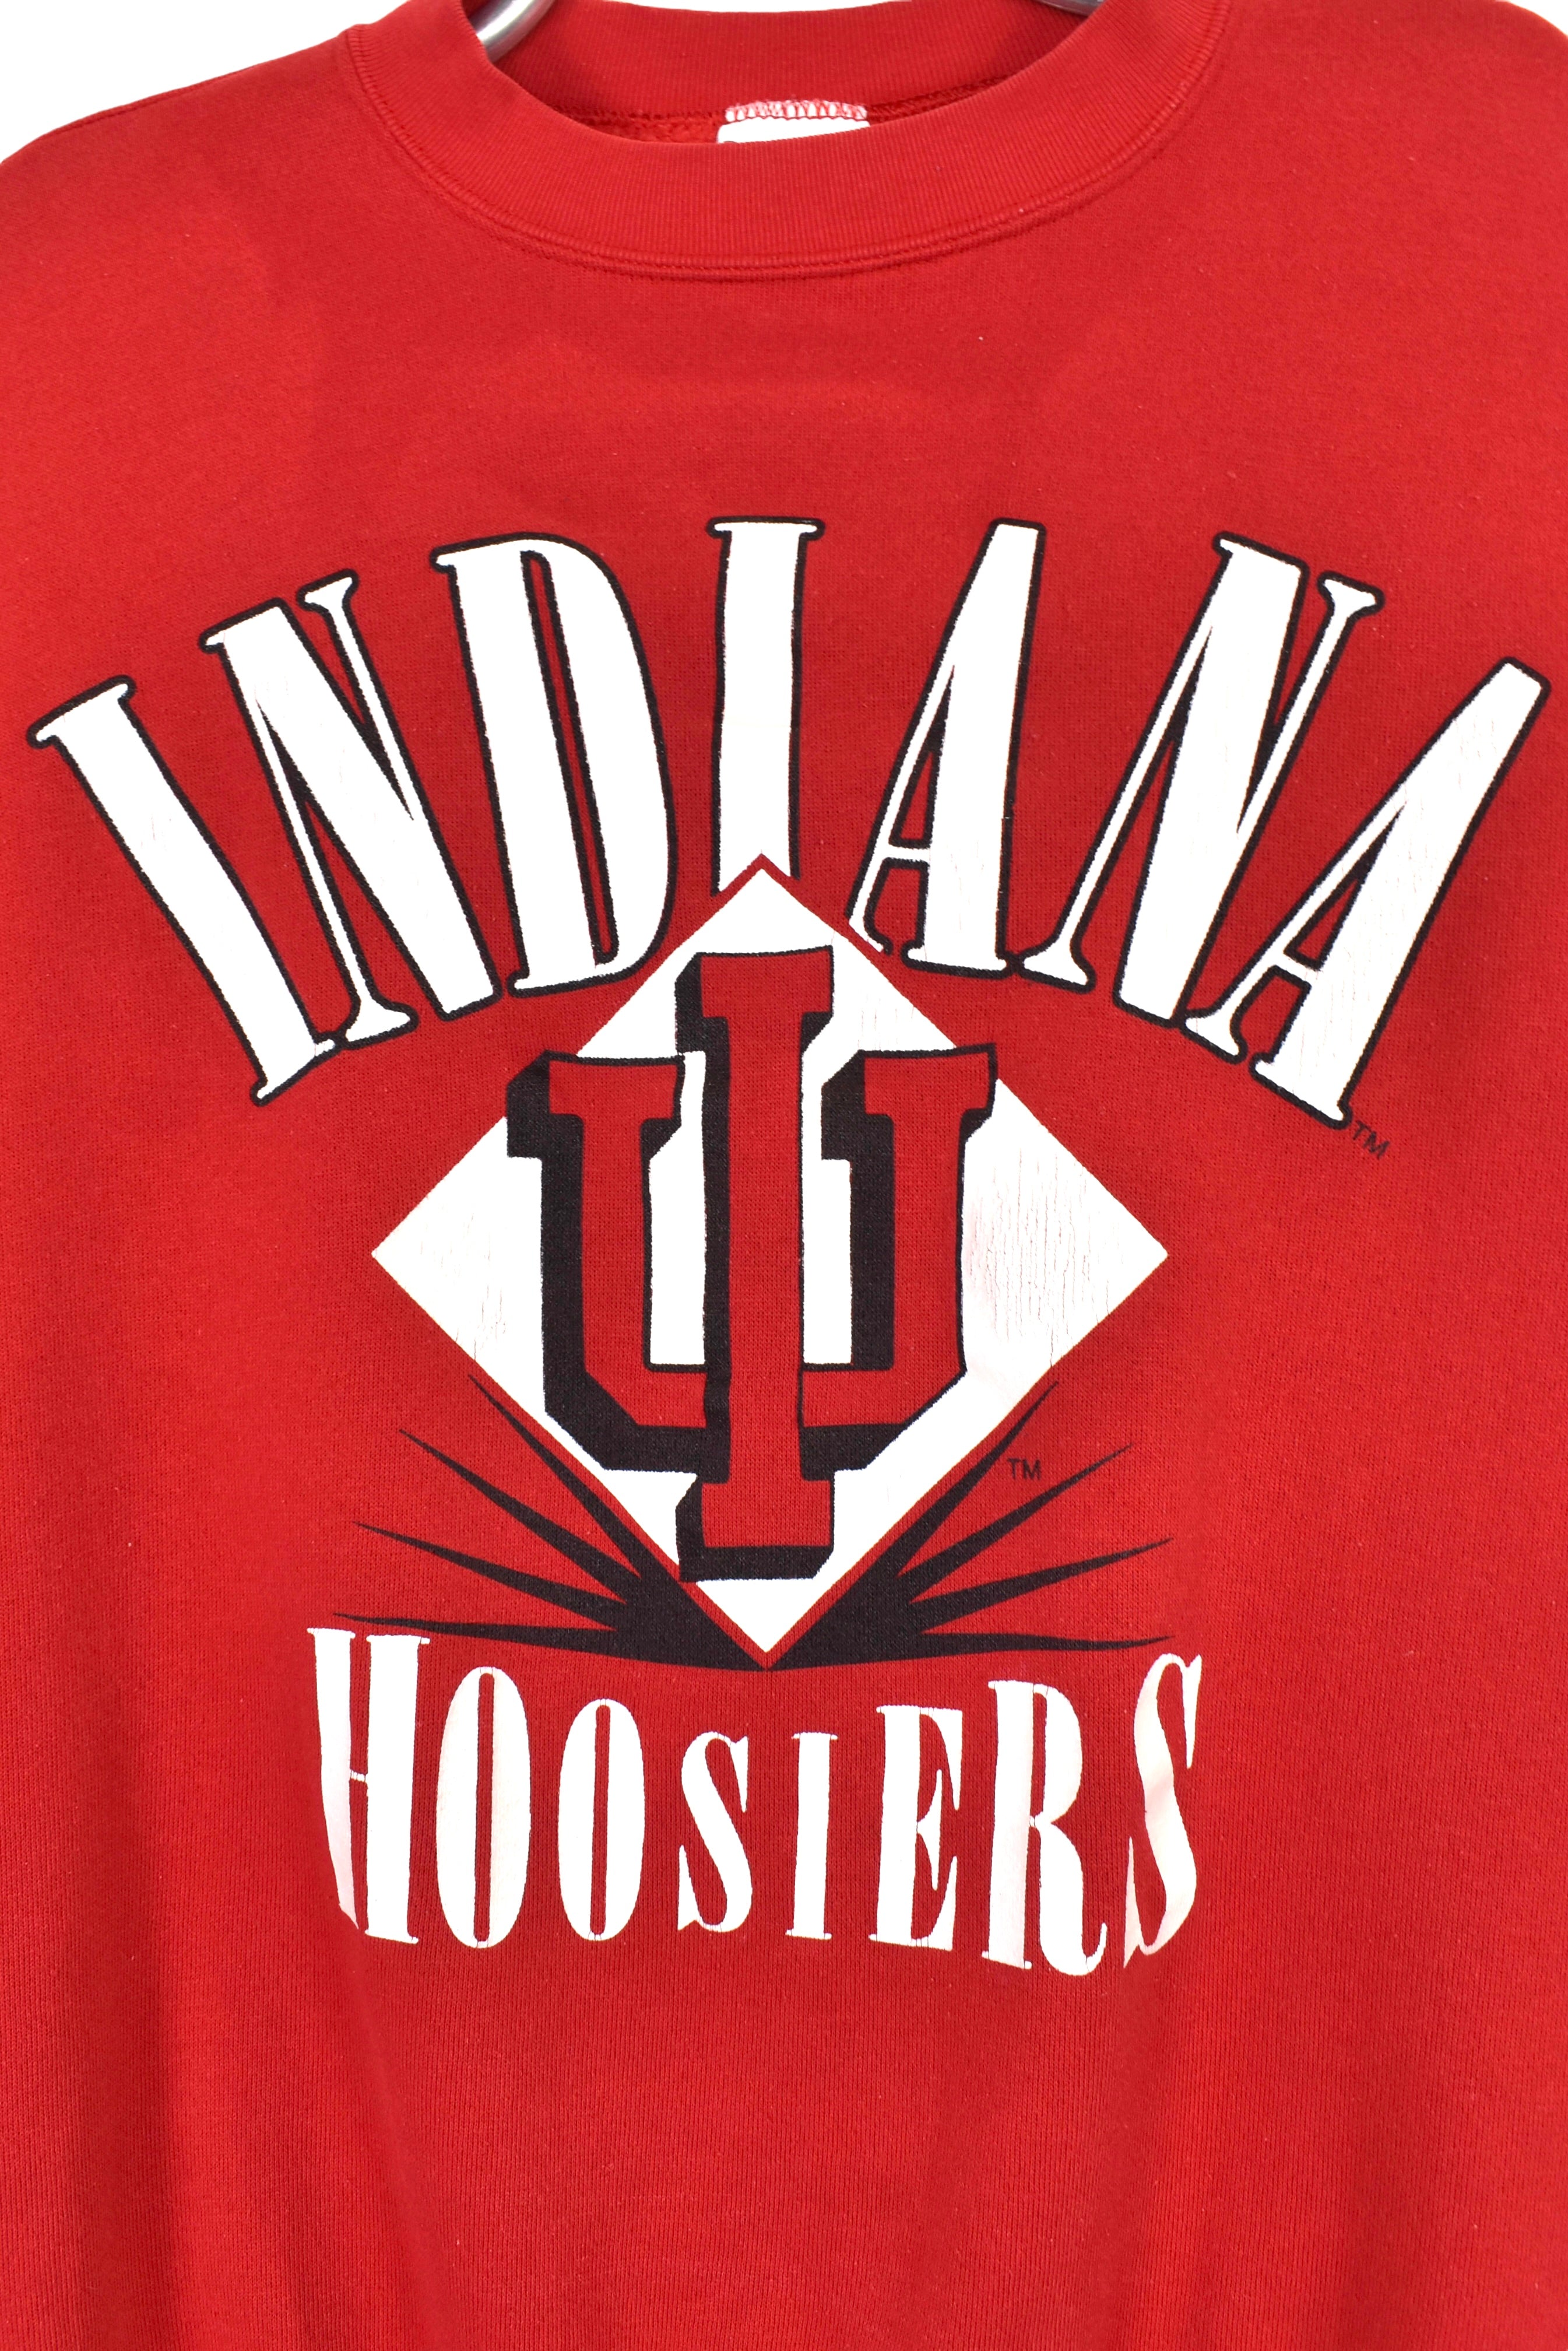 Vintage Indiana University sweatshirt, red Hoosiers graphic crewneck - Large